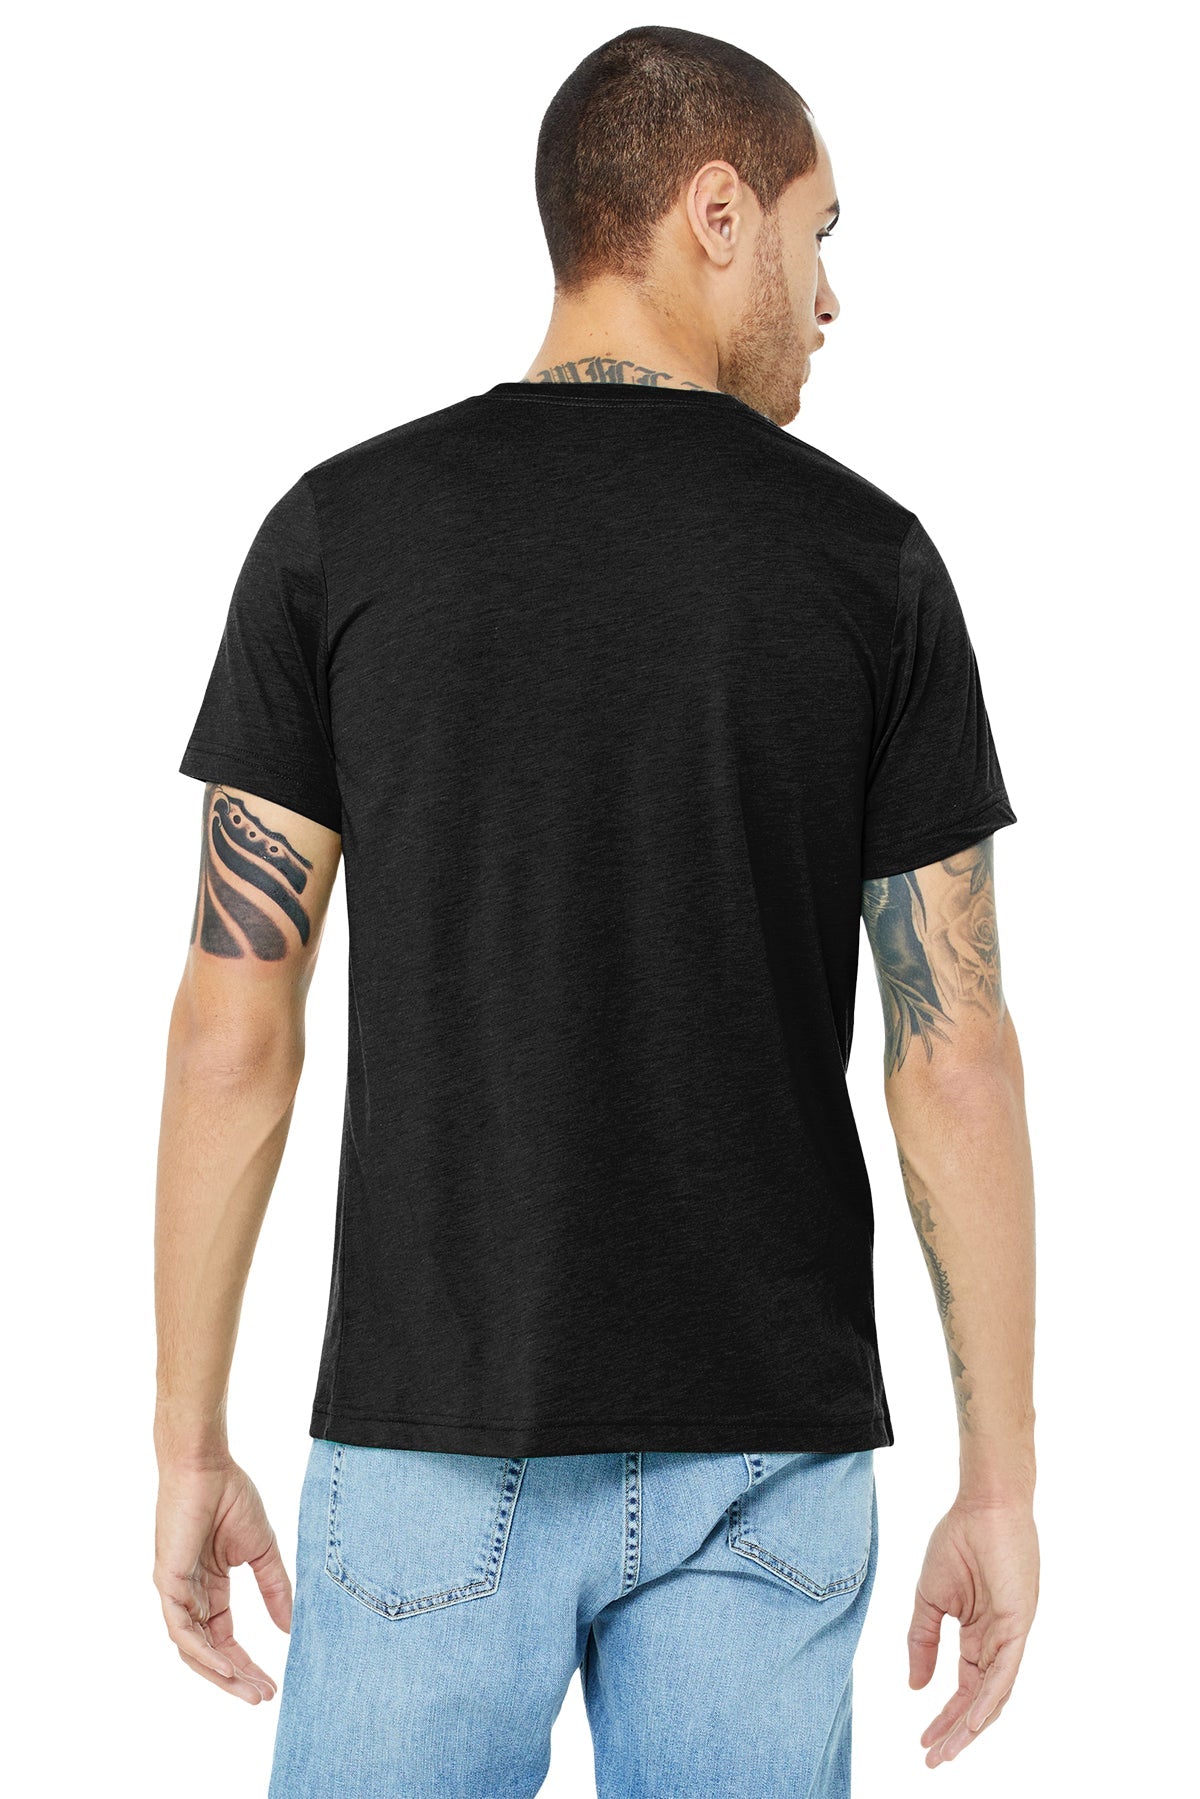 bella + canvas unisex triblend short sleeve t-shirt 3413c blk hthr triblnd